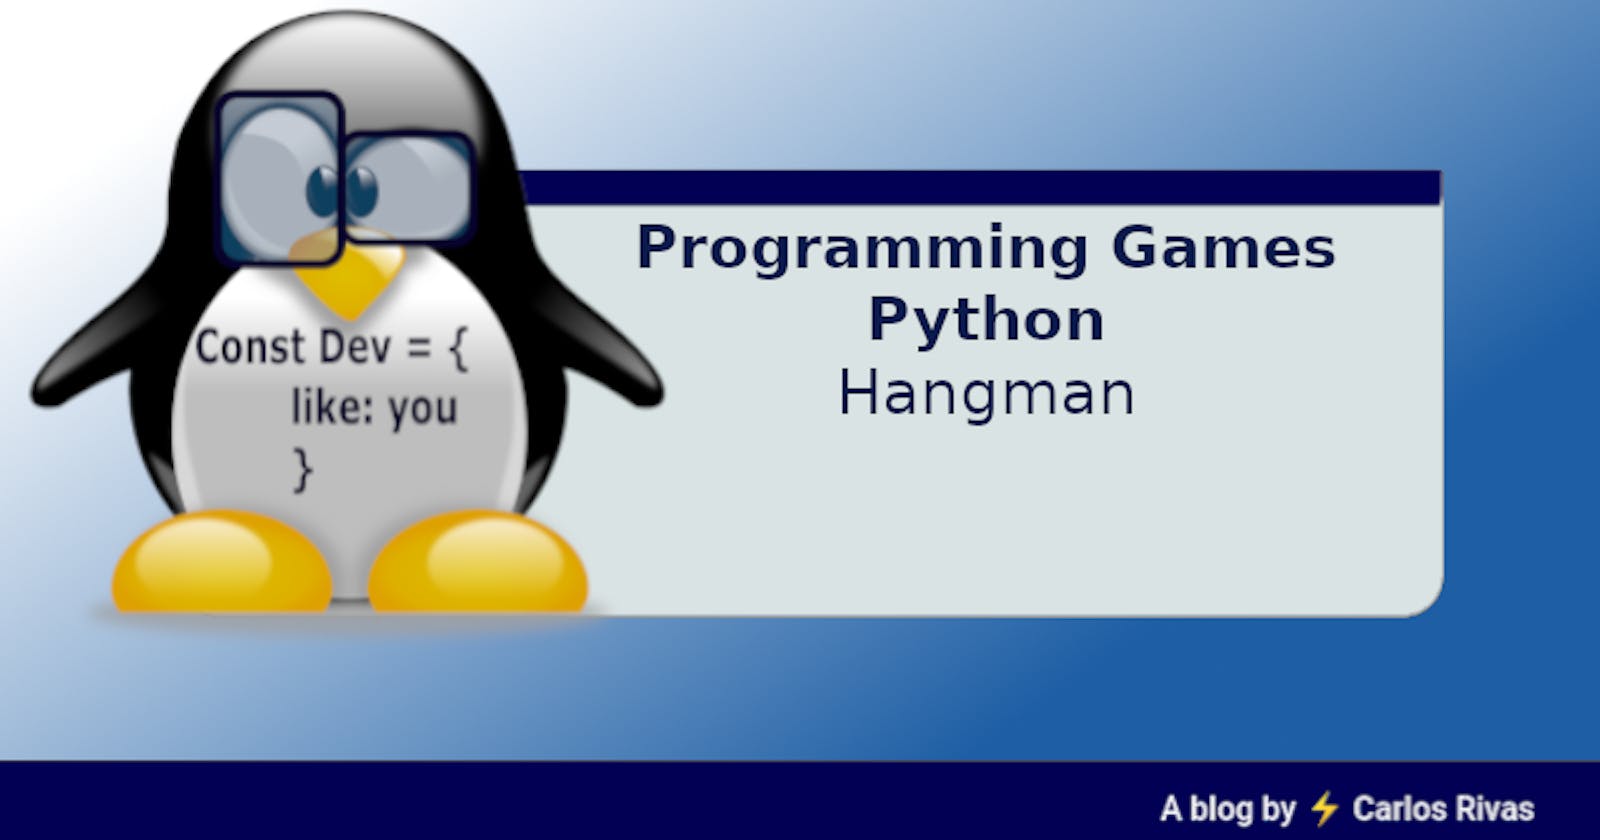 Programming Games
Python
Hangman